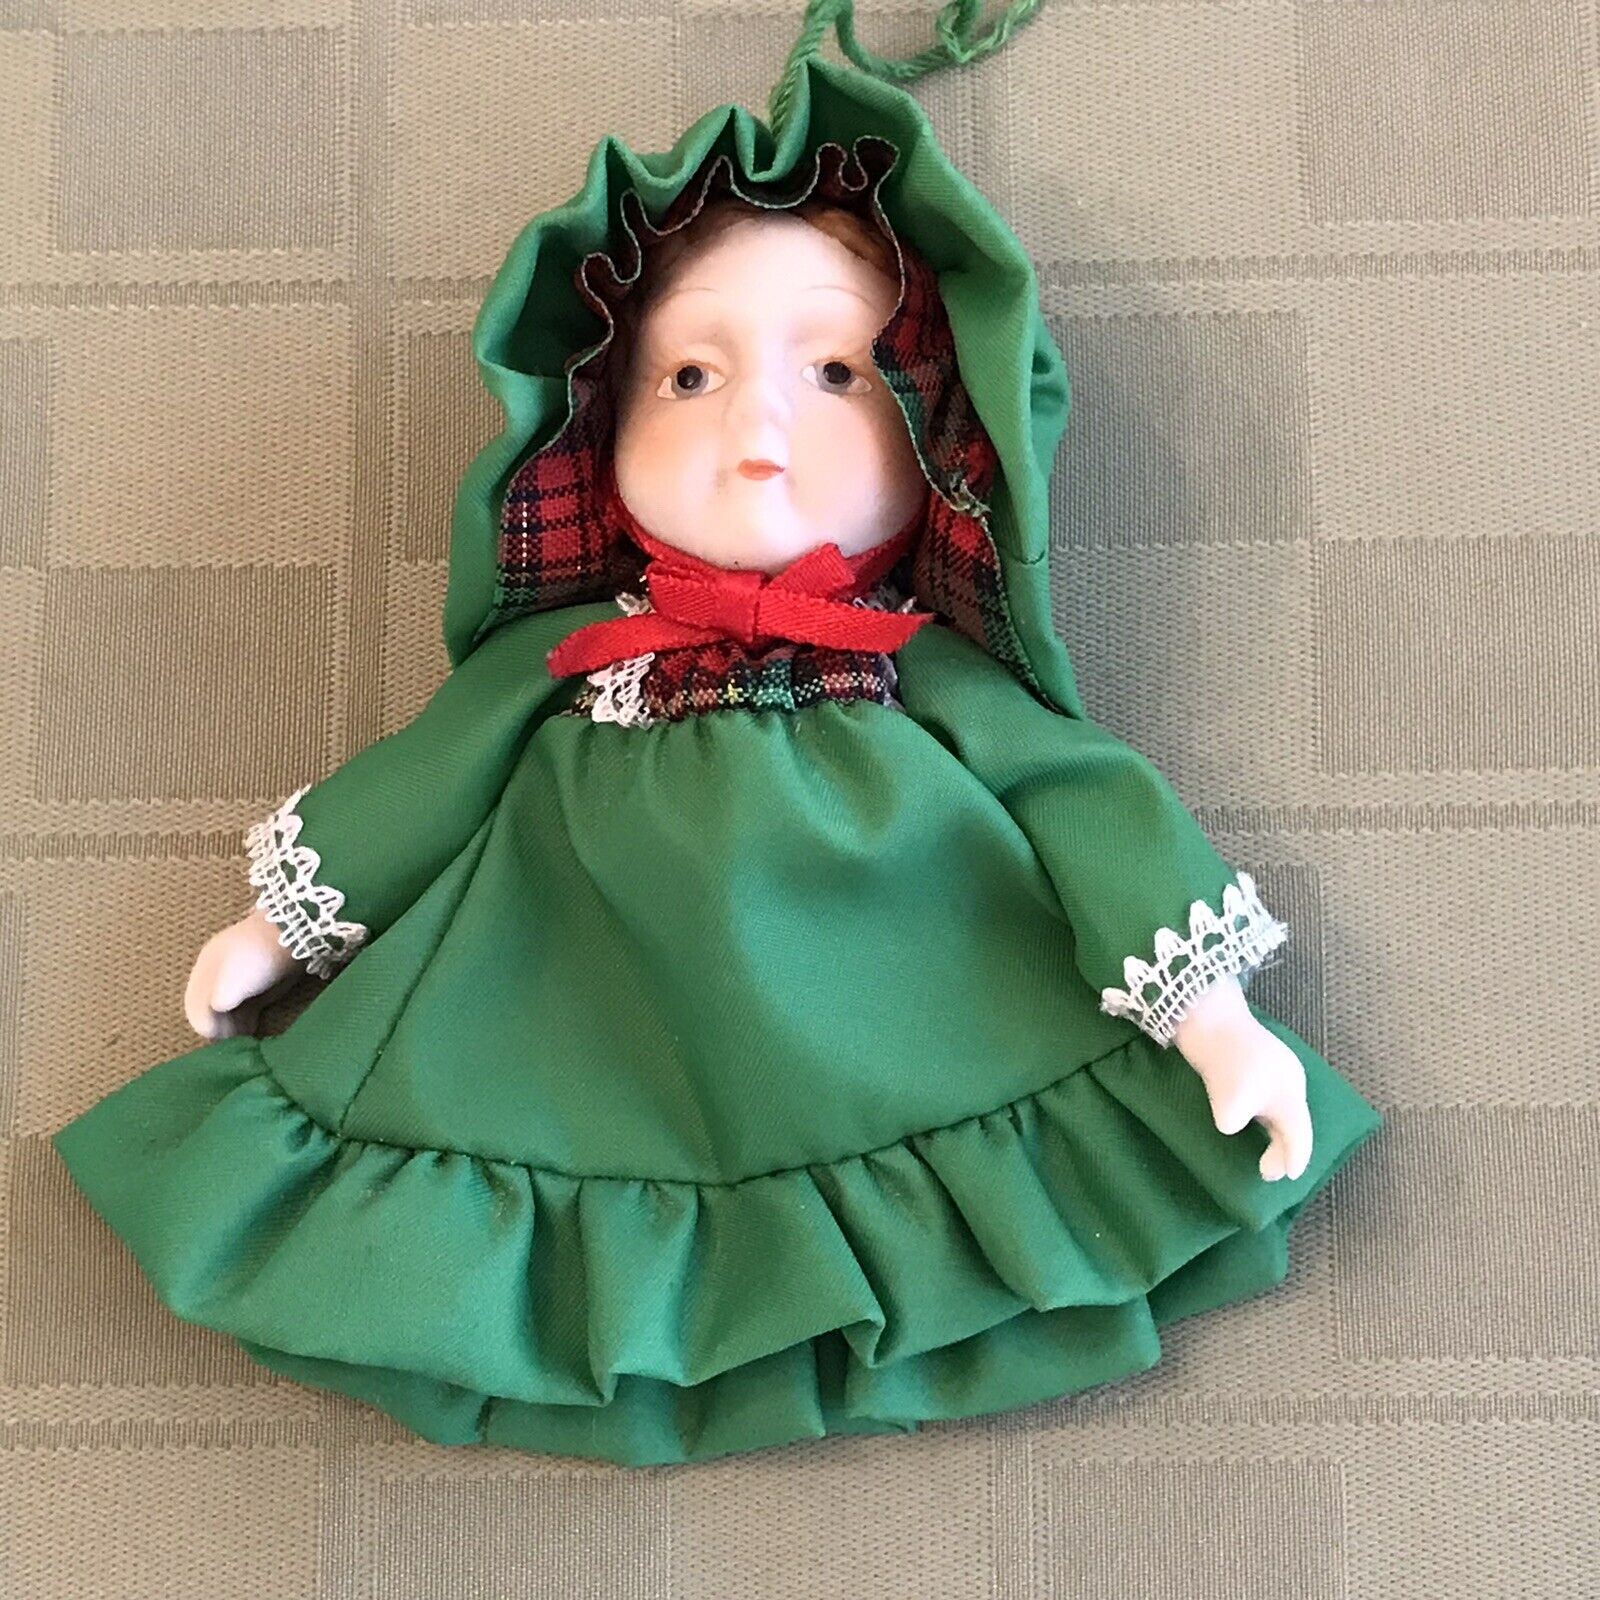 Hallmark AMANDA 1984 Hand-Painted Porcelain Doll Keepsake Ornament Green Vintage